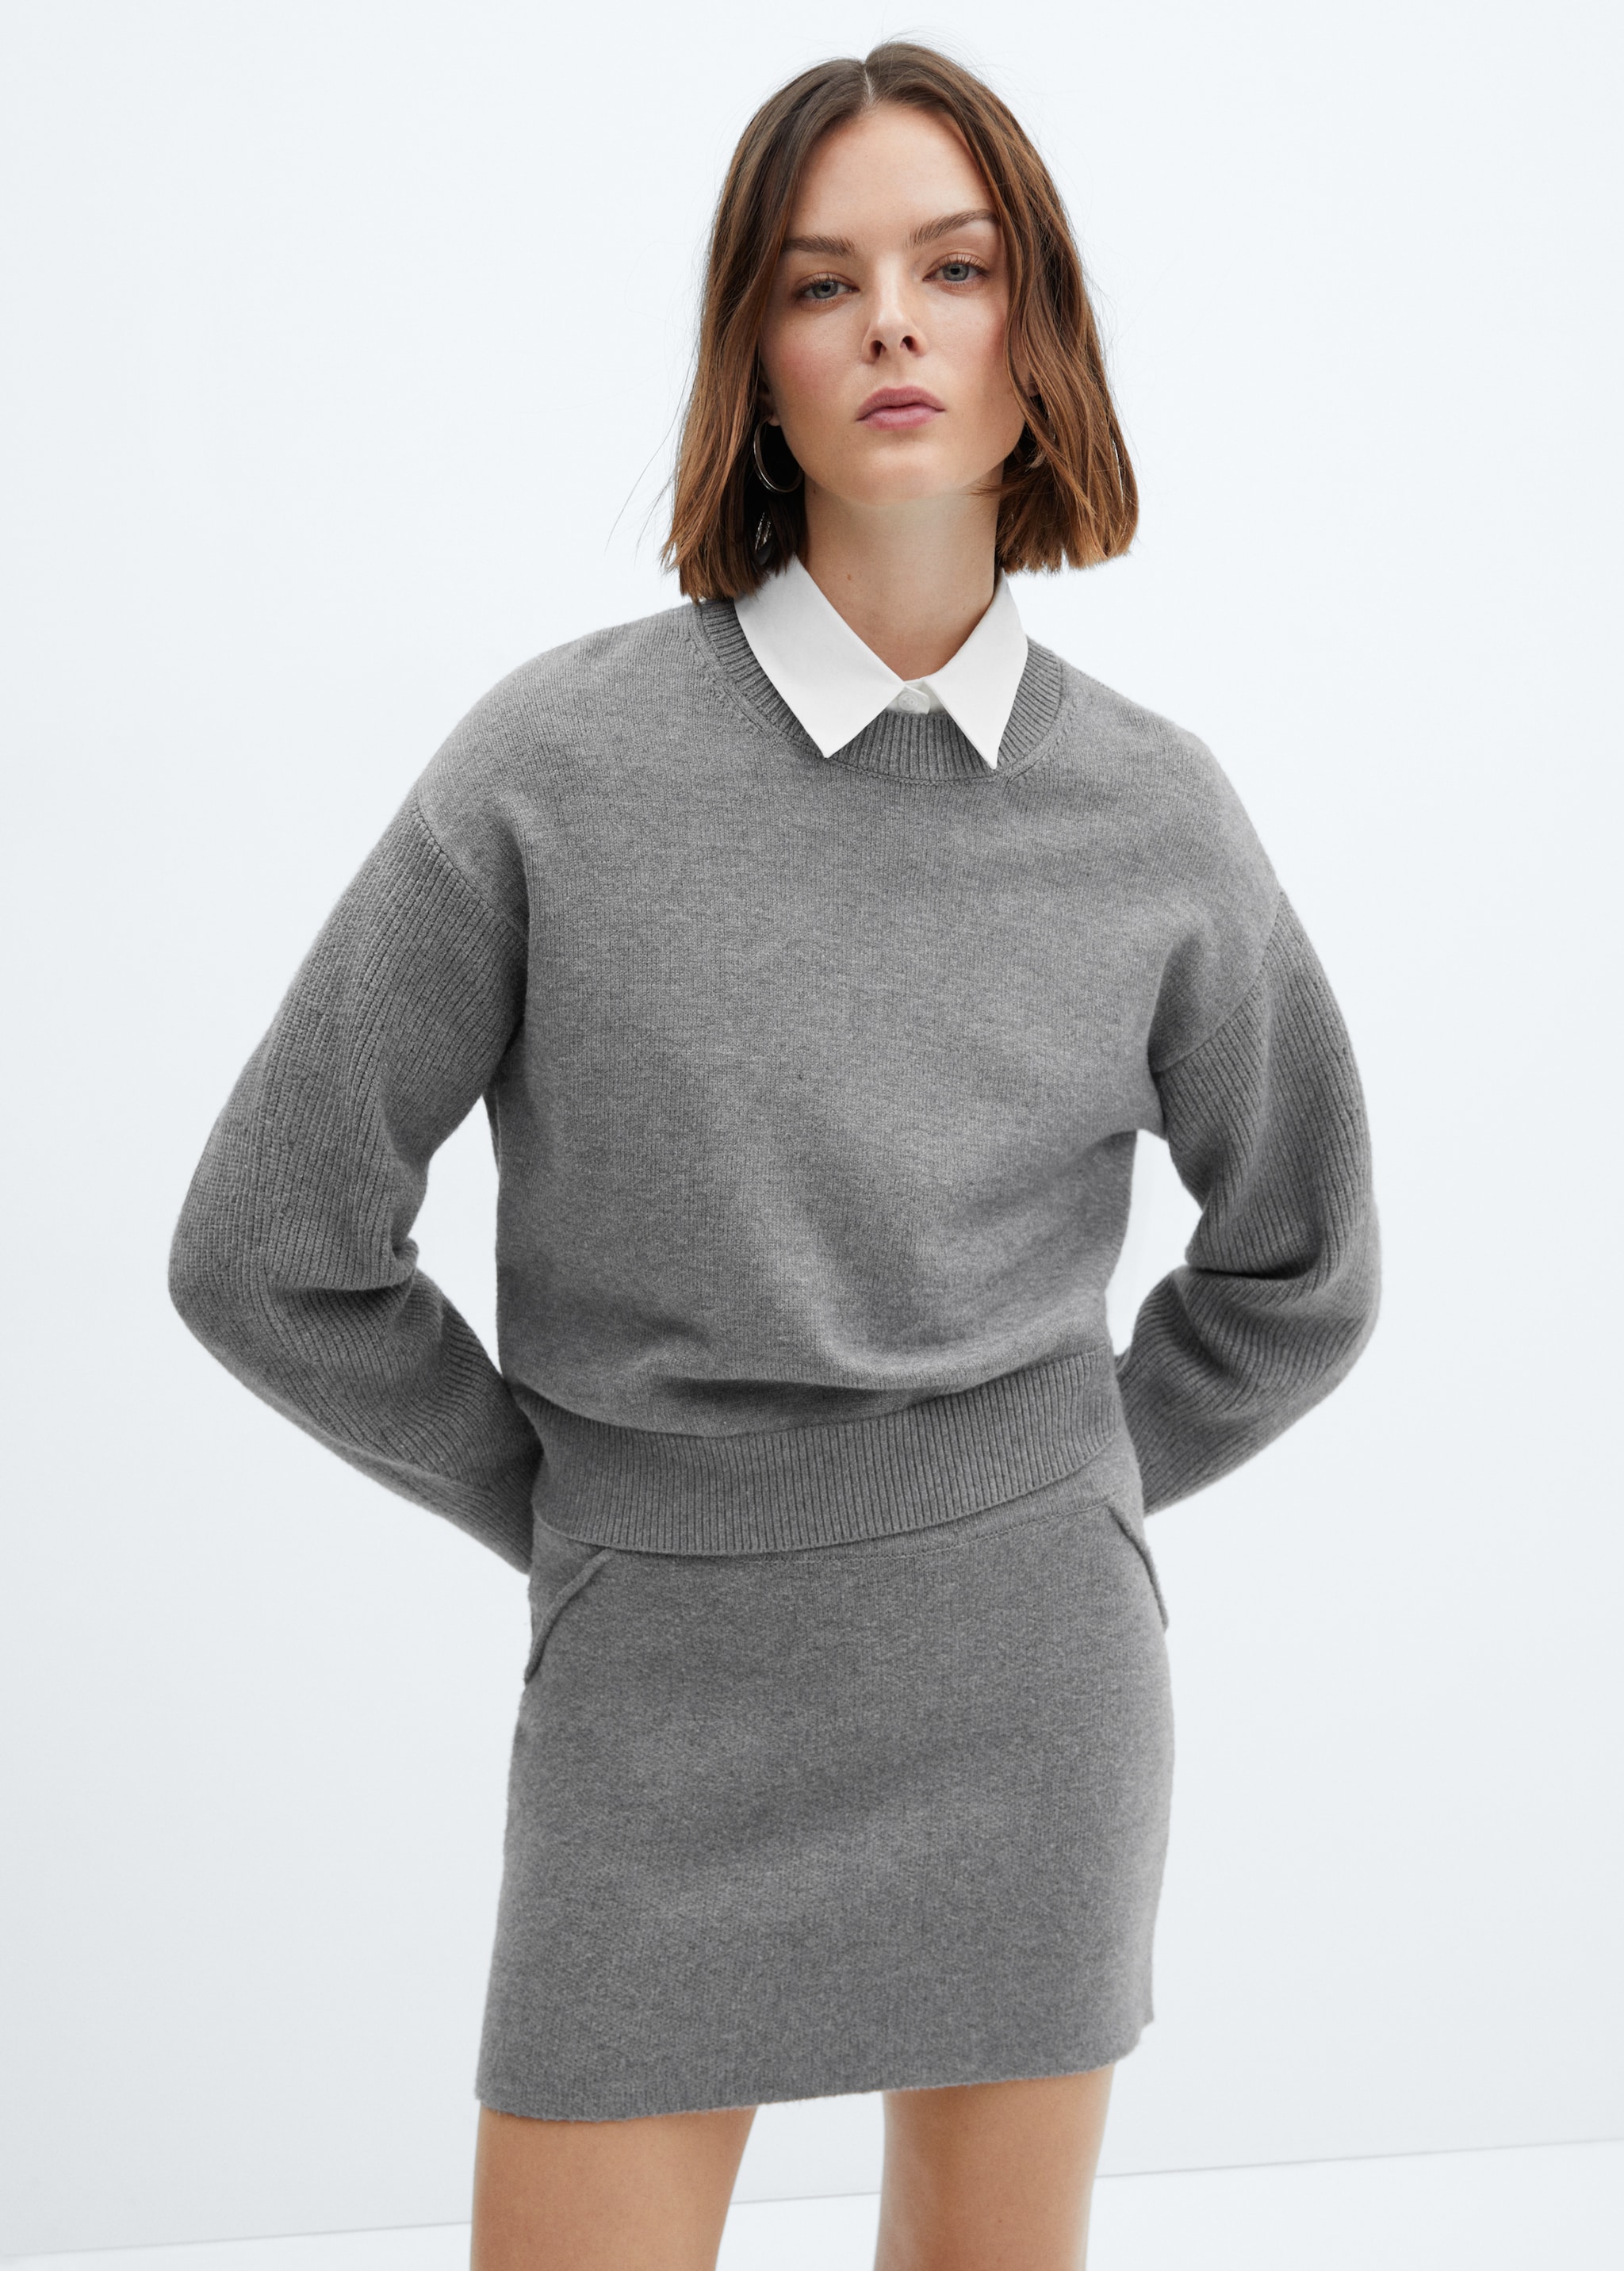 Round-neck knitted sweater  - Medium plane